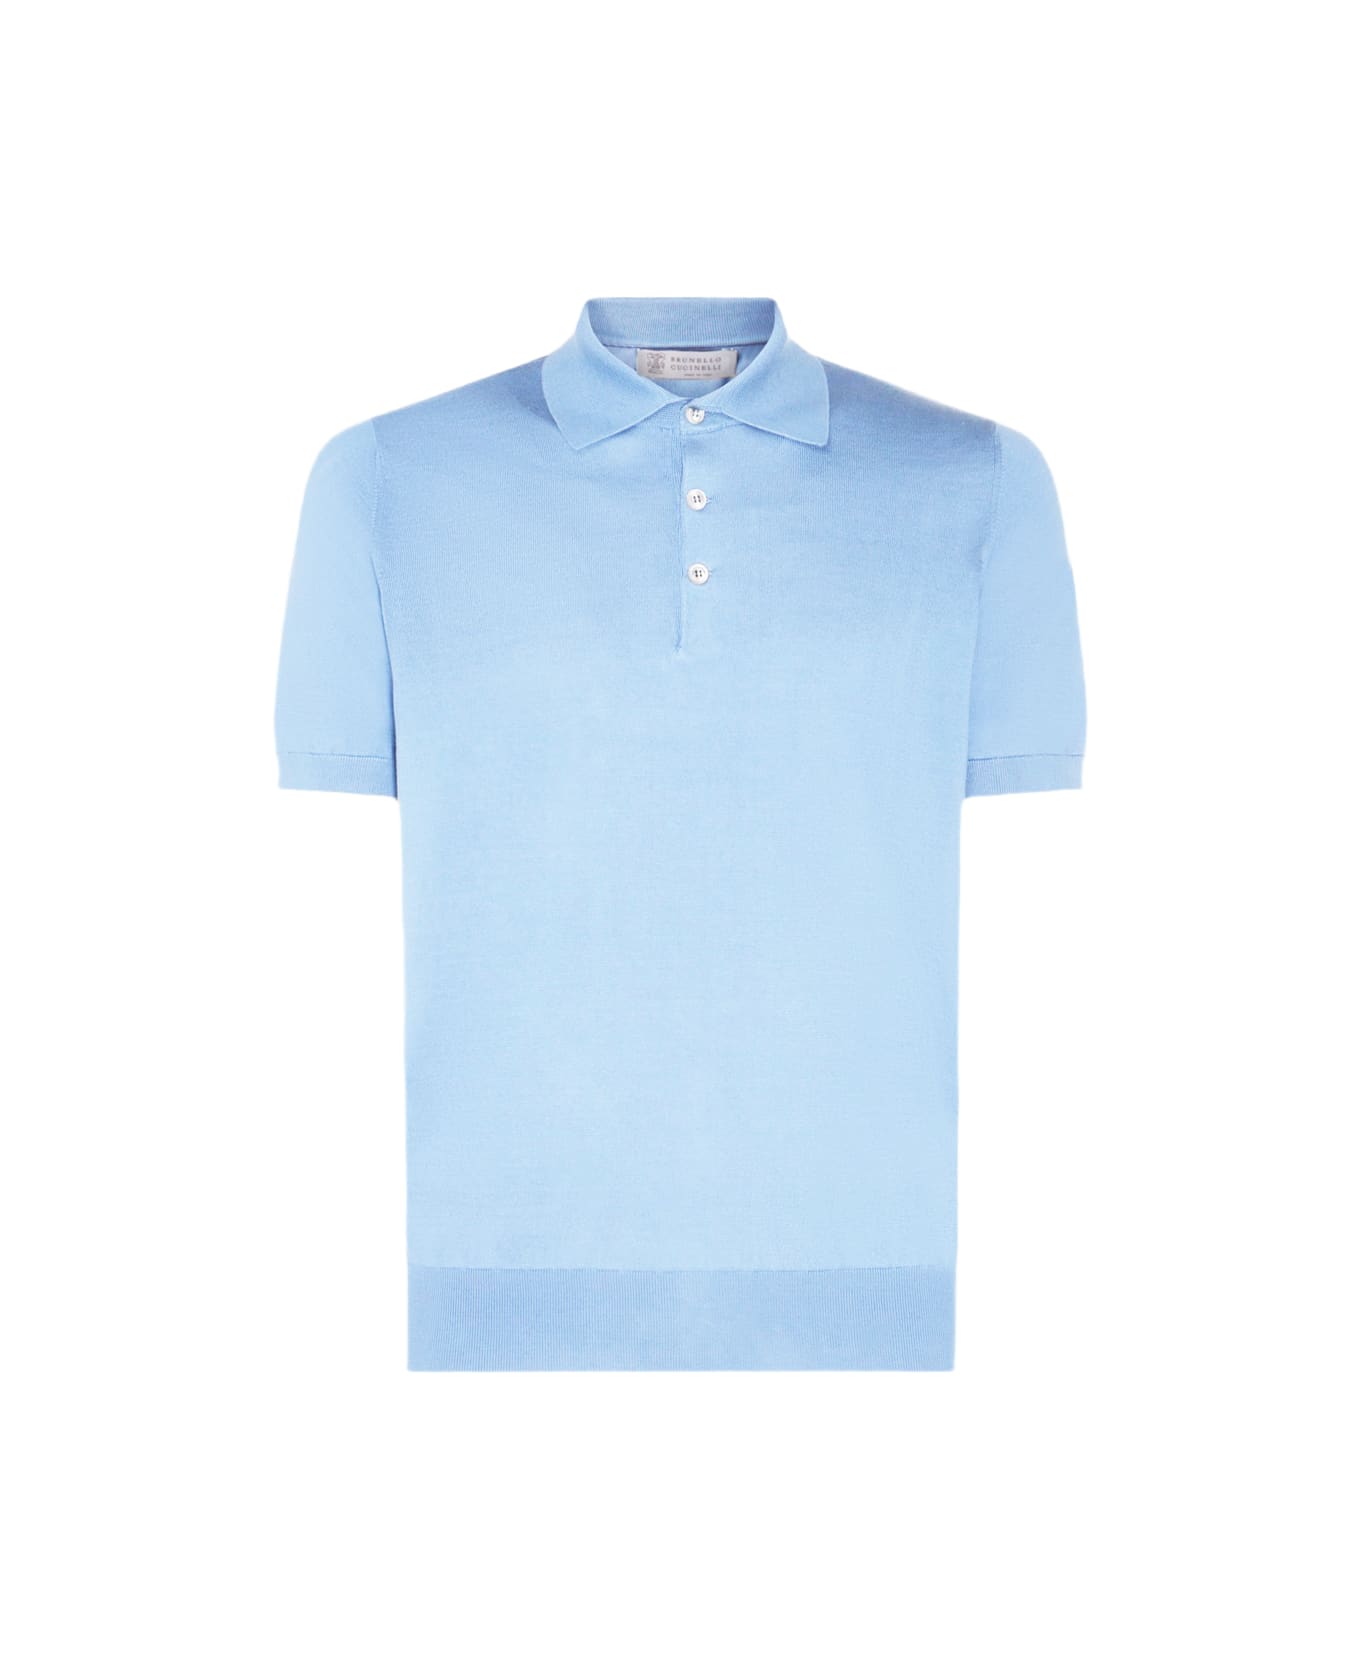 Brunello Cucinelli Light Blue Cotton Polo Shirt - Turchese ポロシャツ